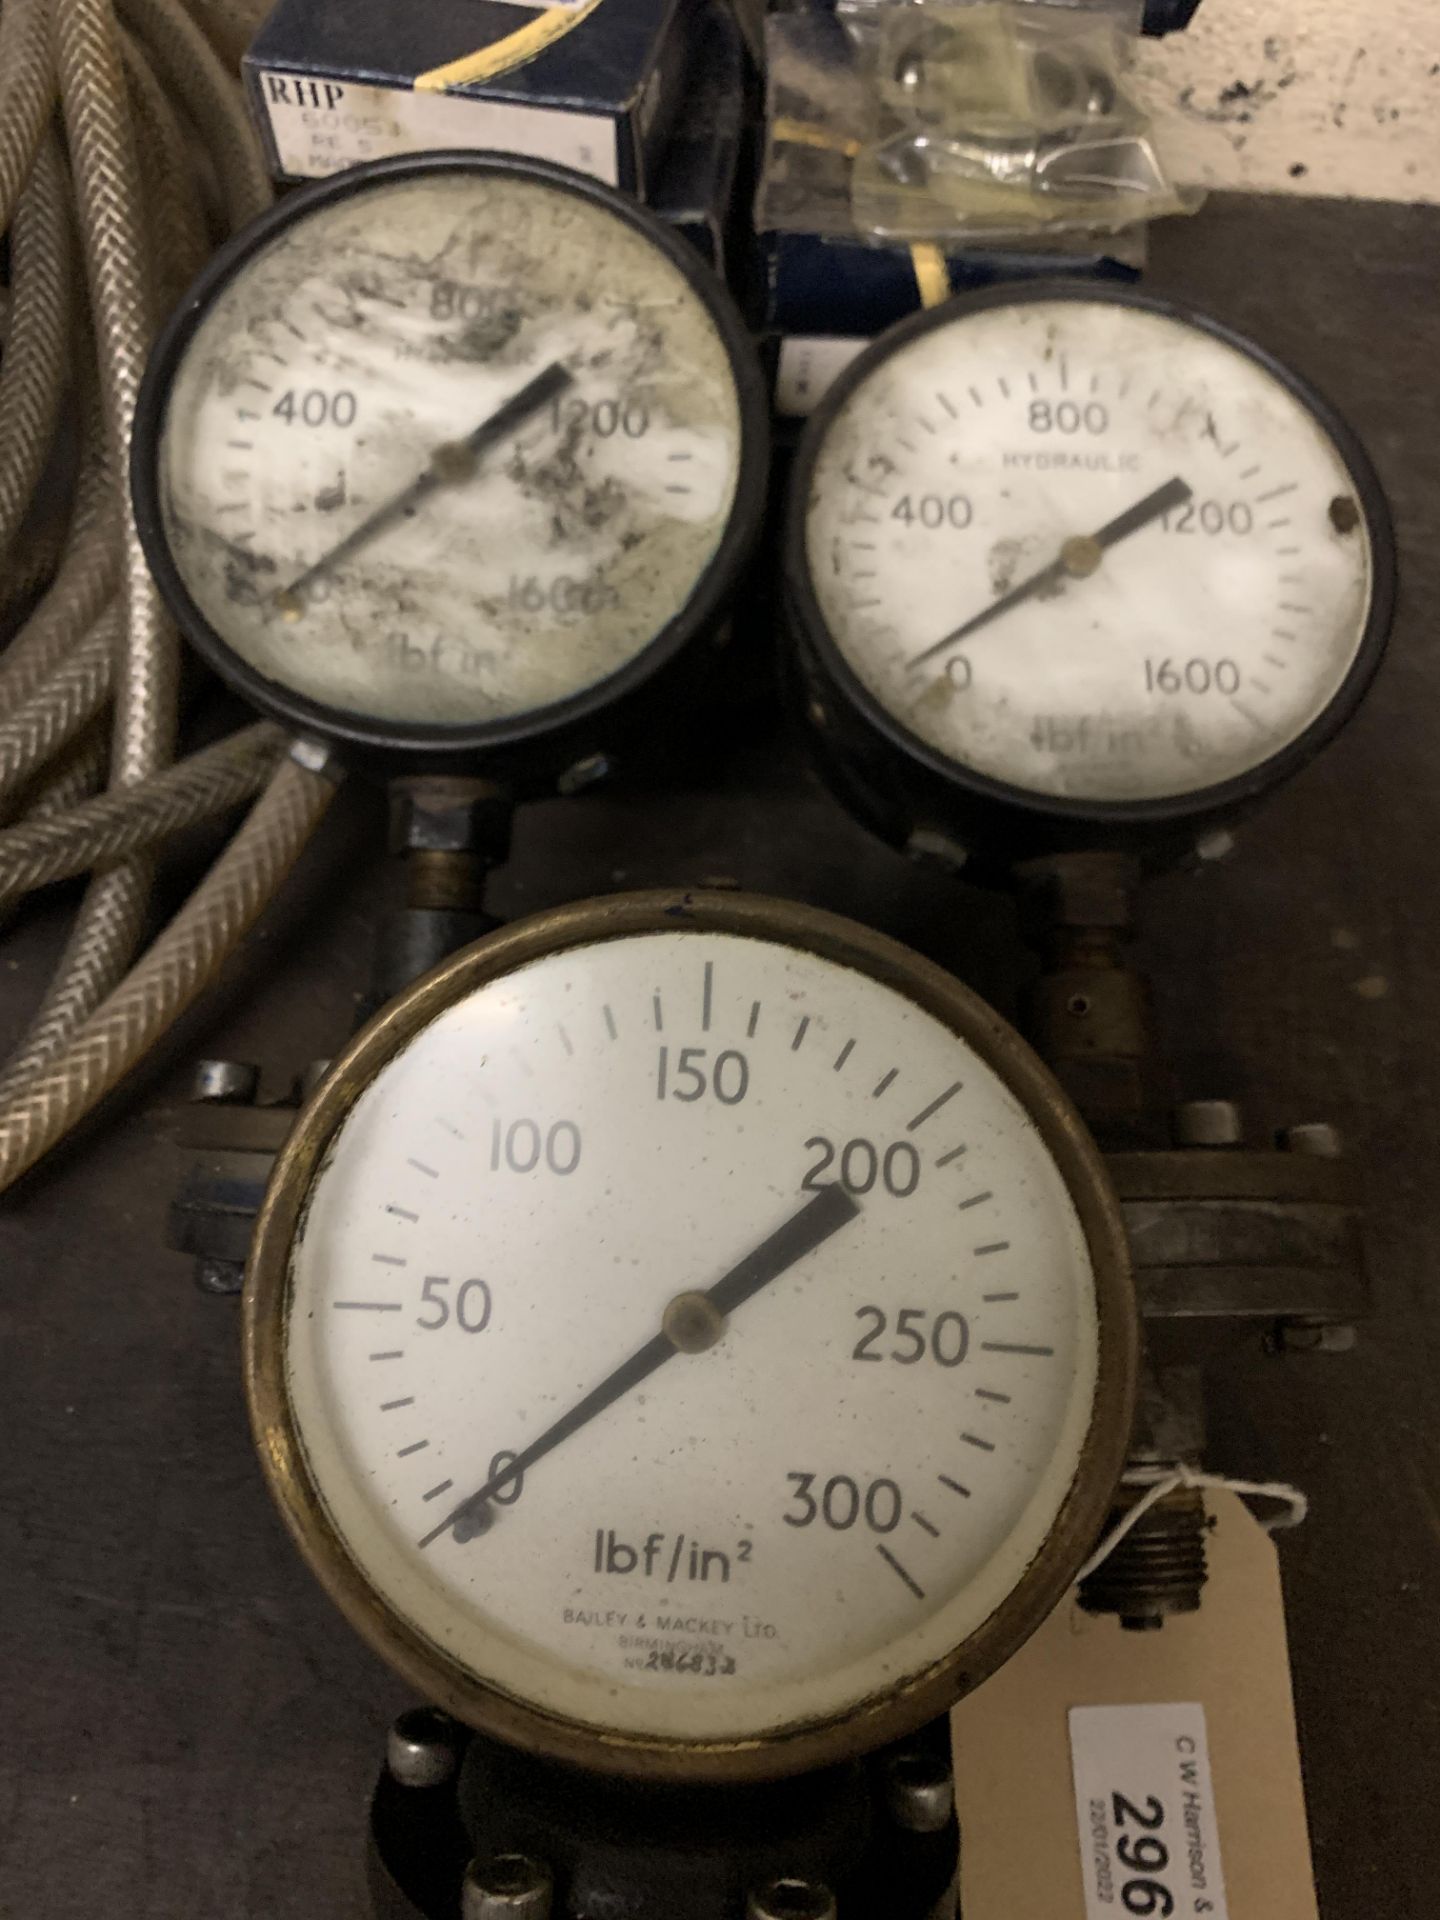 Three pressure gauges - two max pressure 1600 11F/in²,